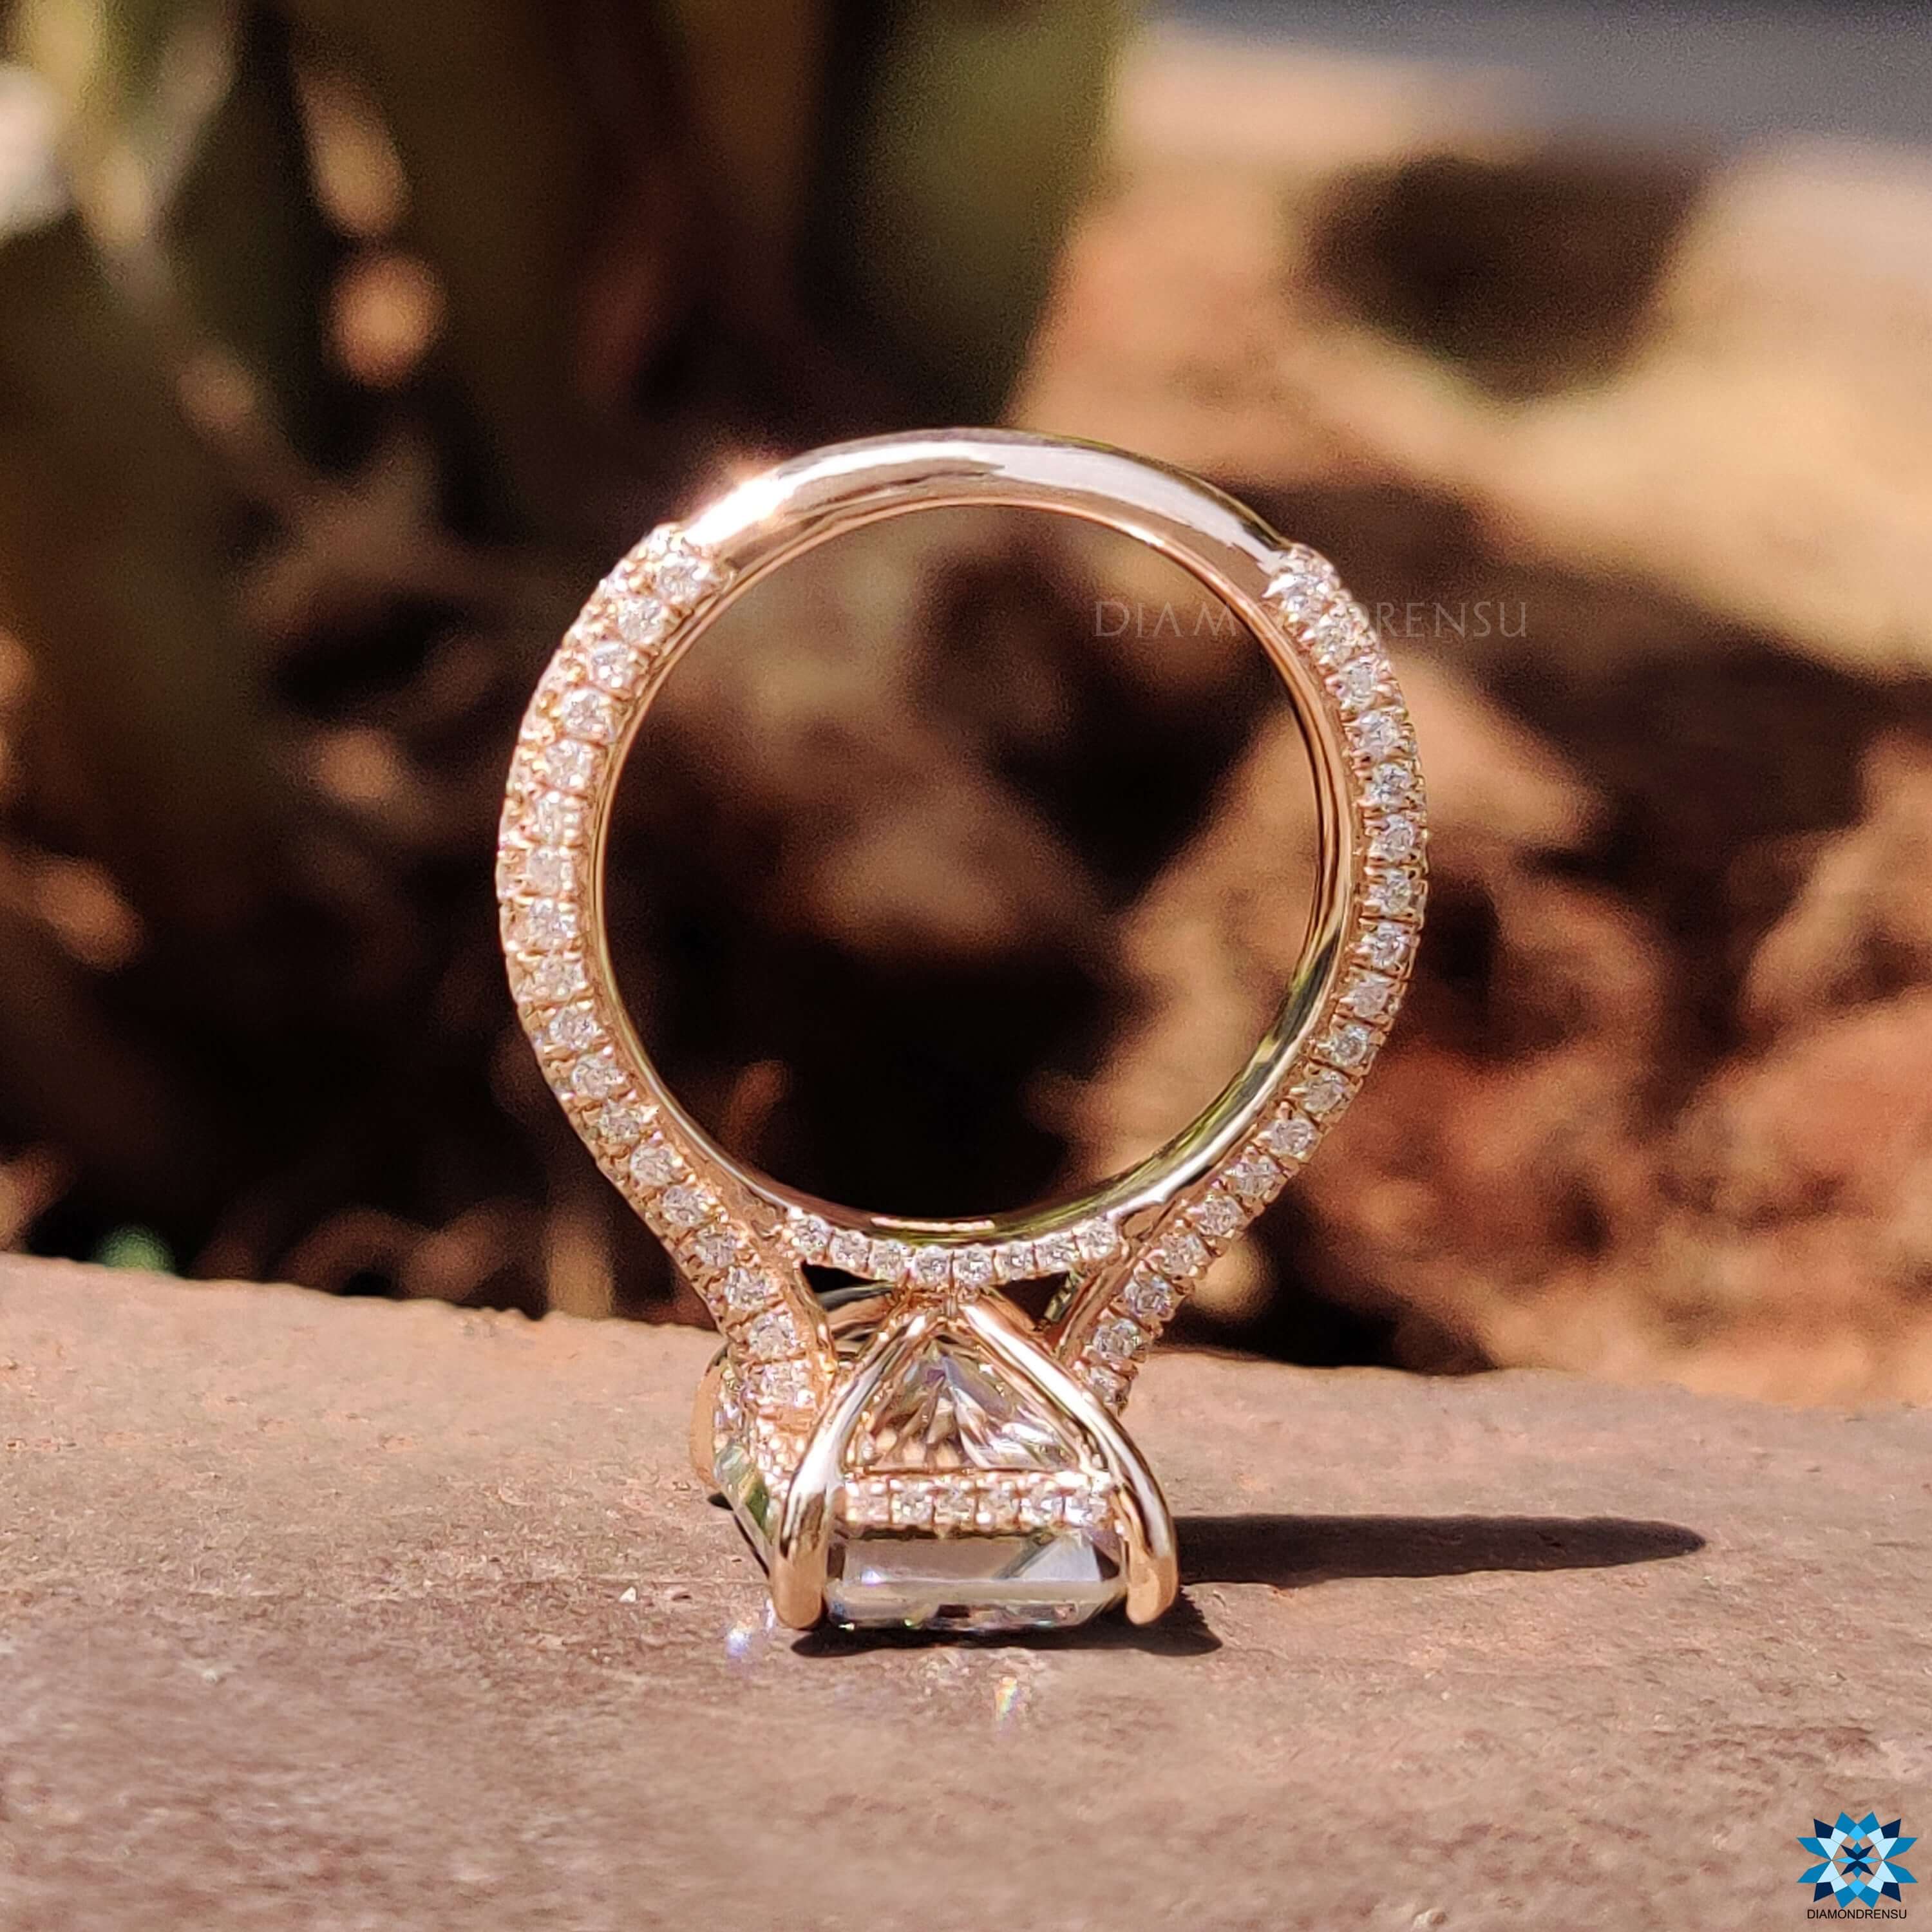 radiant engagement ring - diamondrensu